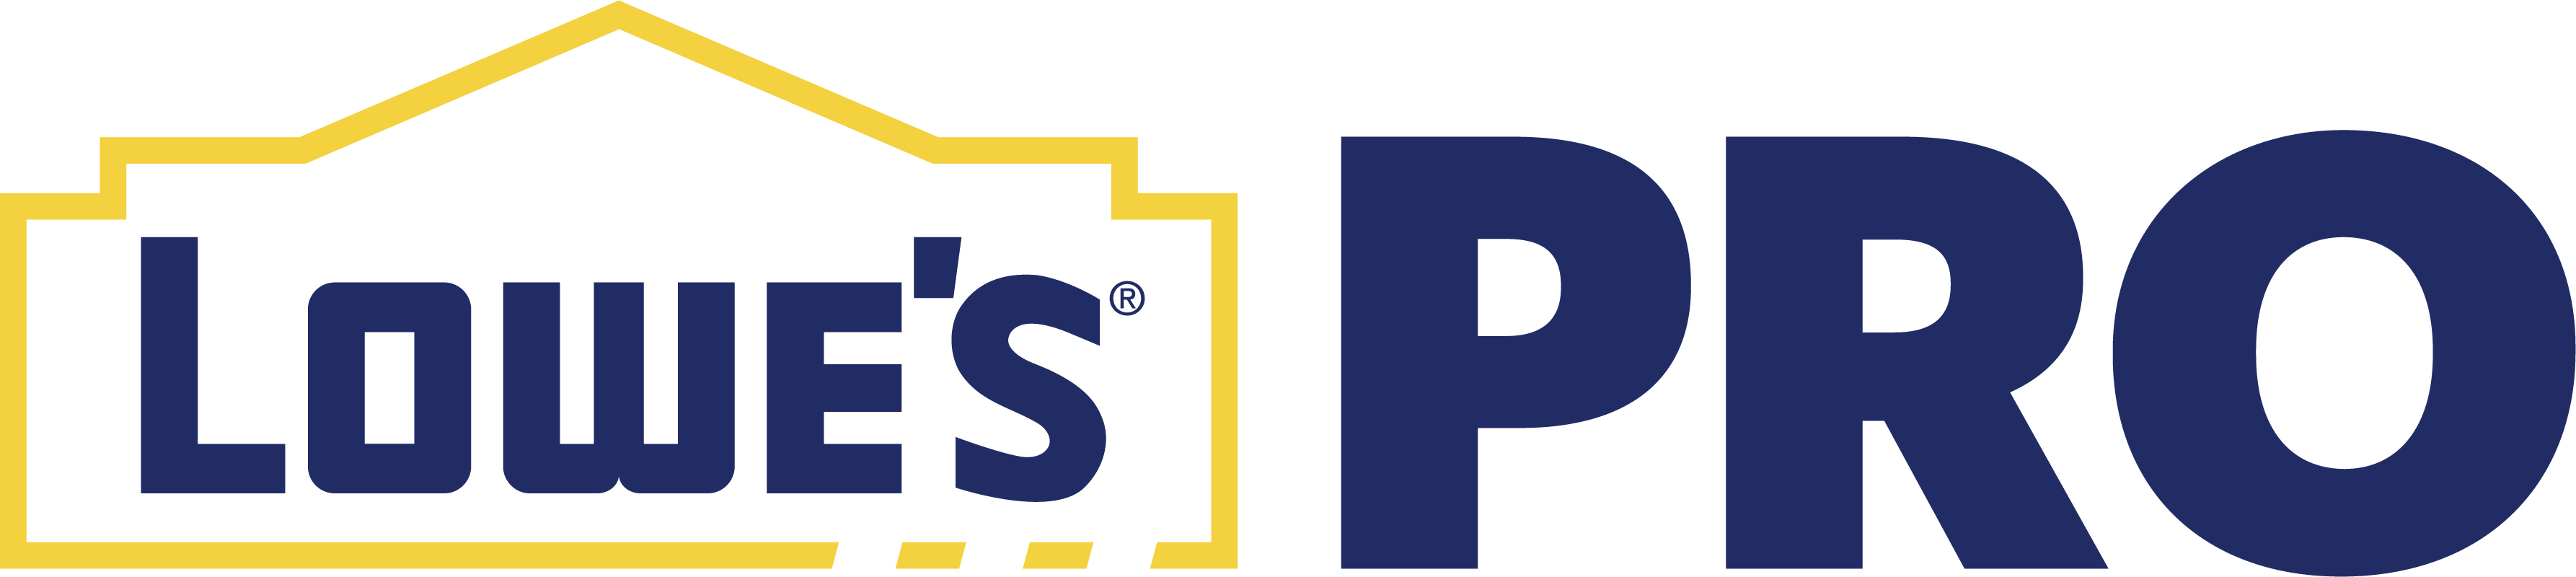 Lowes Pro logo